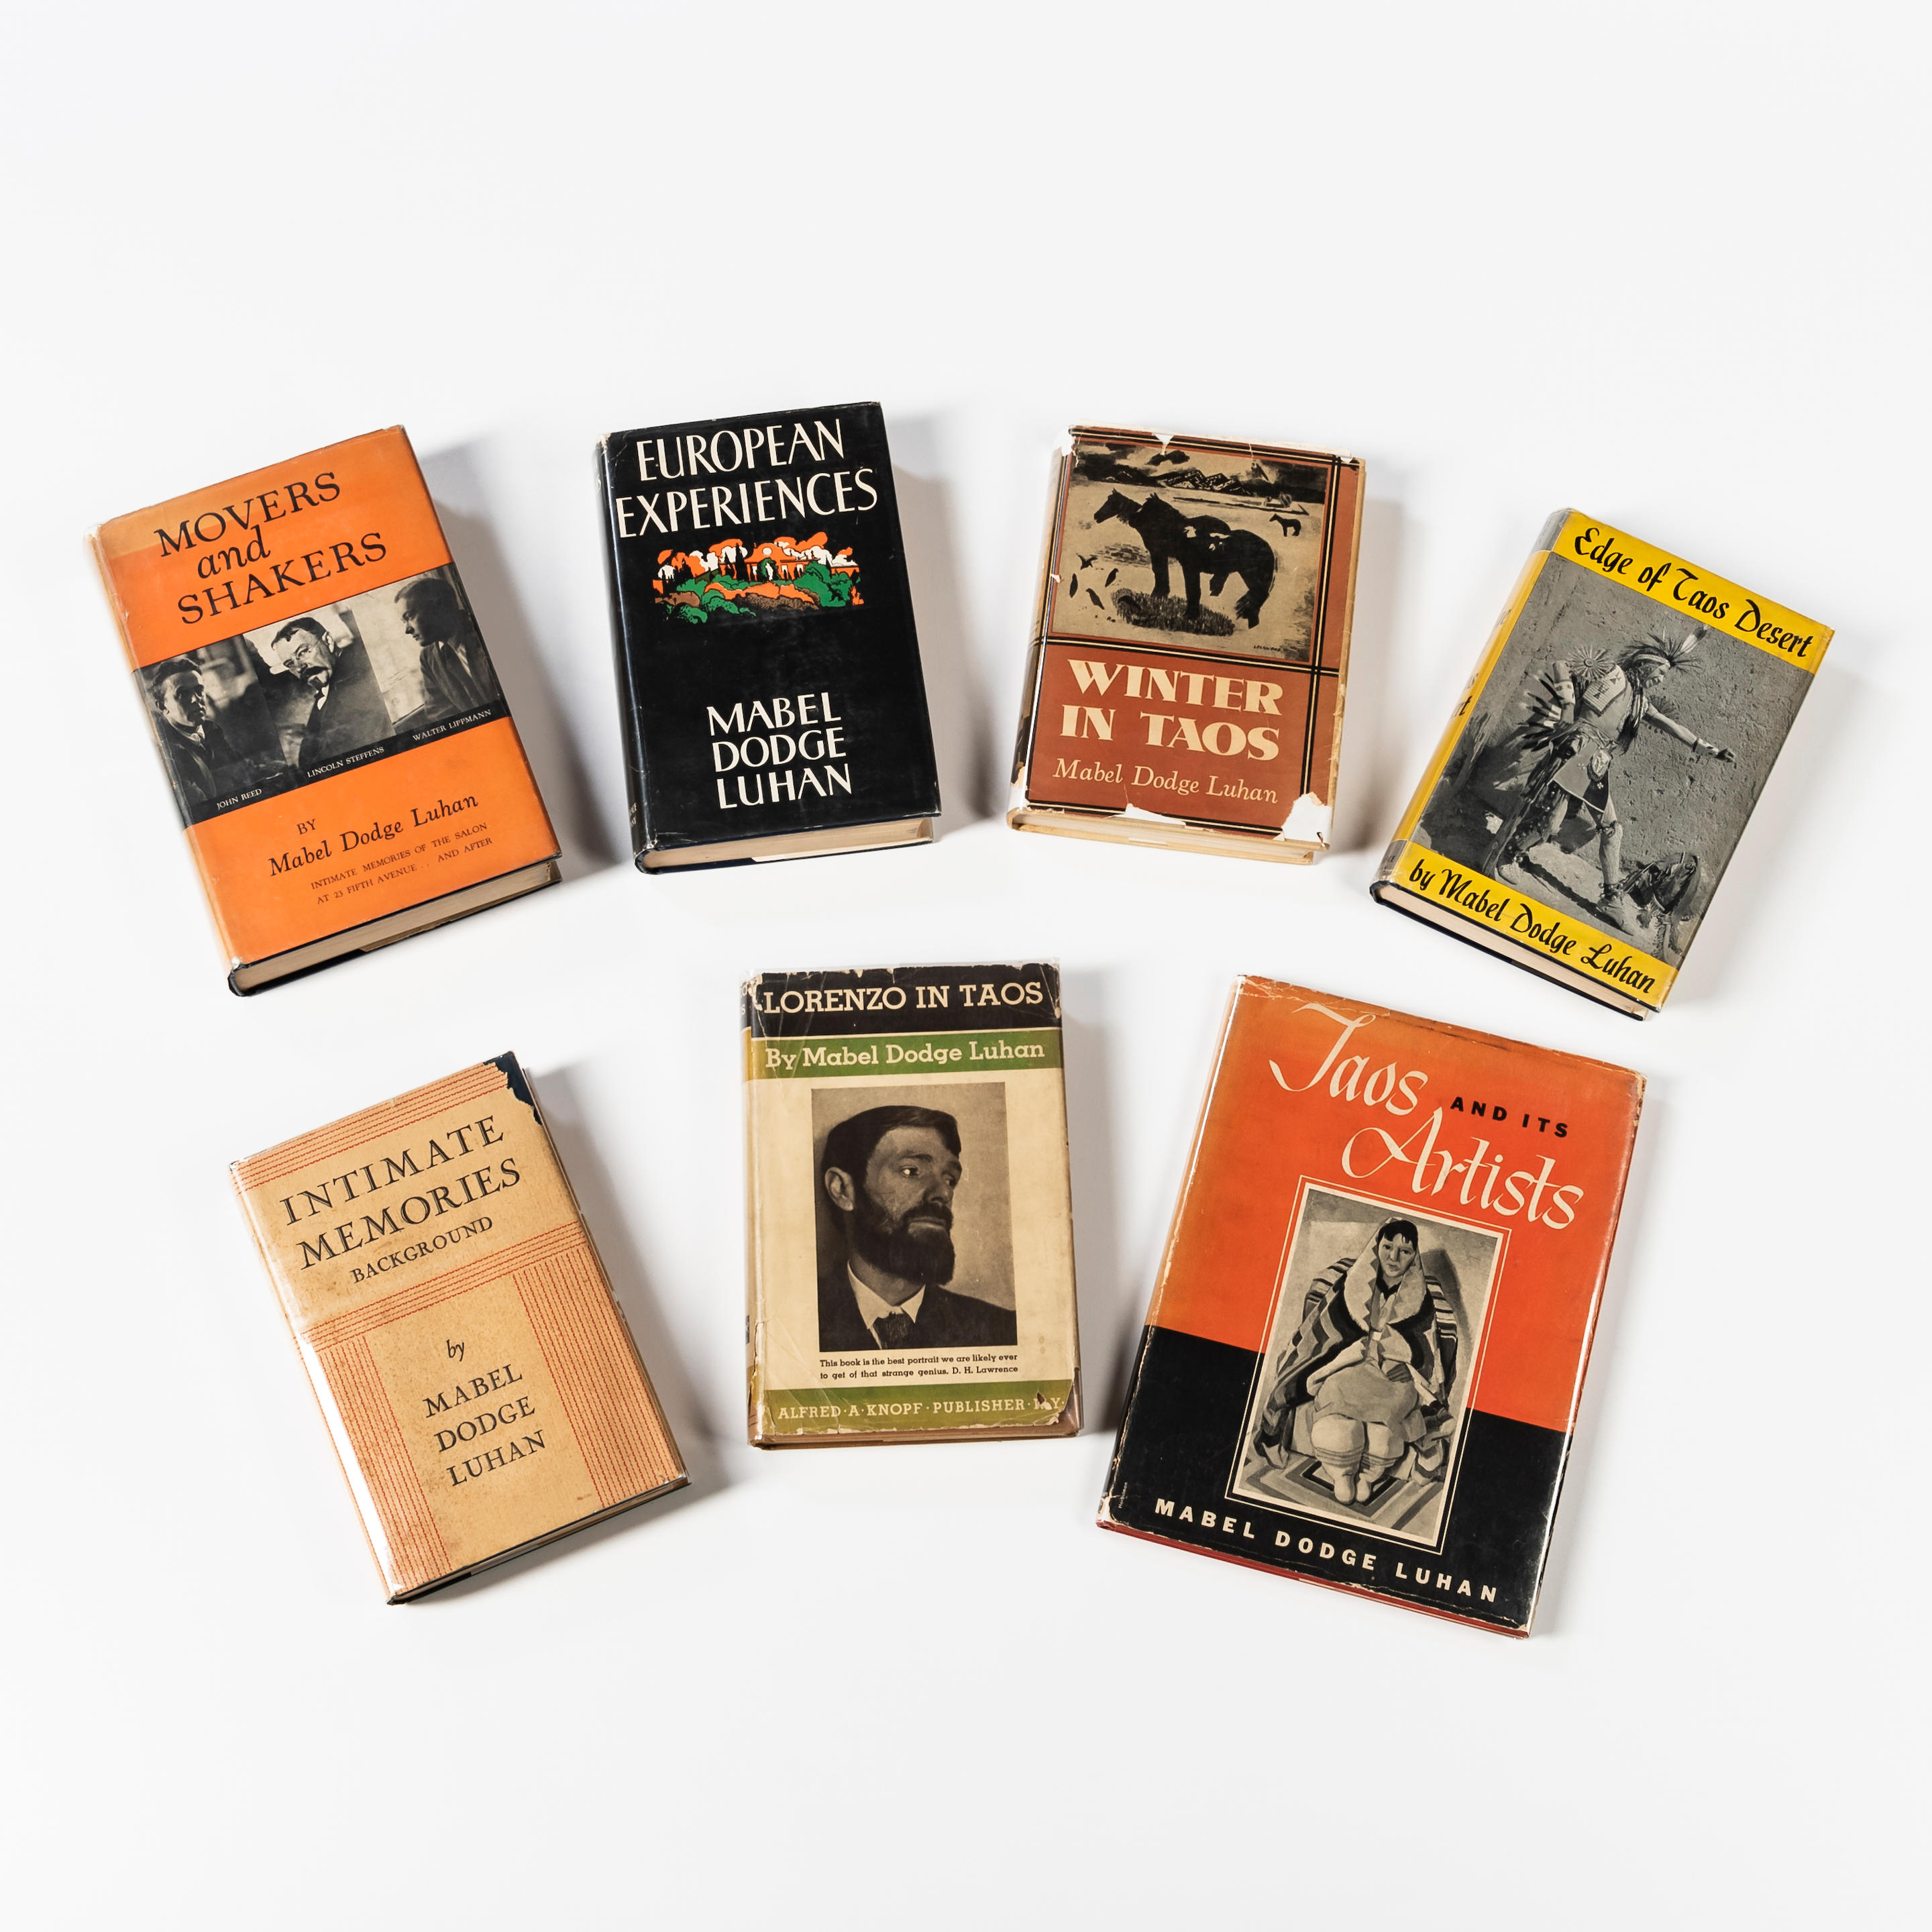 7 books by Mabel Dodge Luhan Luhan, Mabel Dodge (1879-1962)